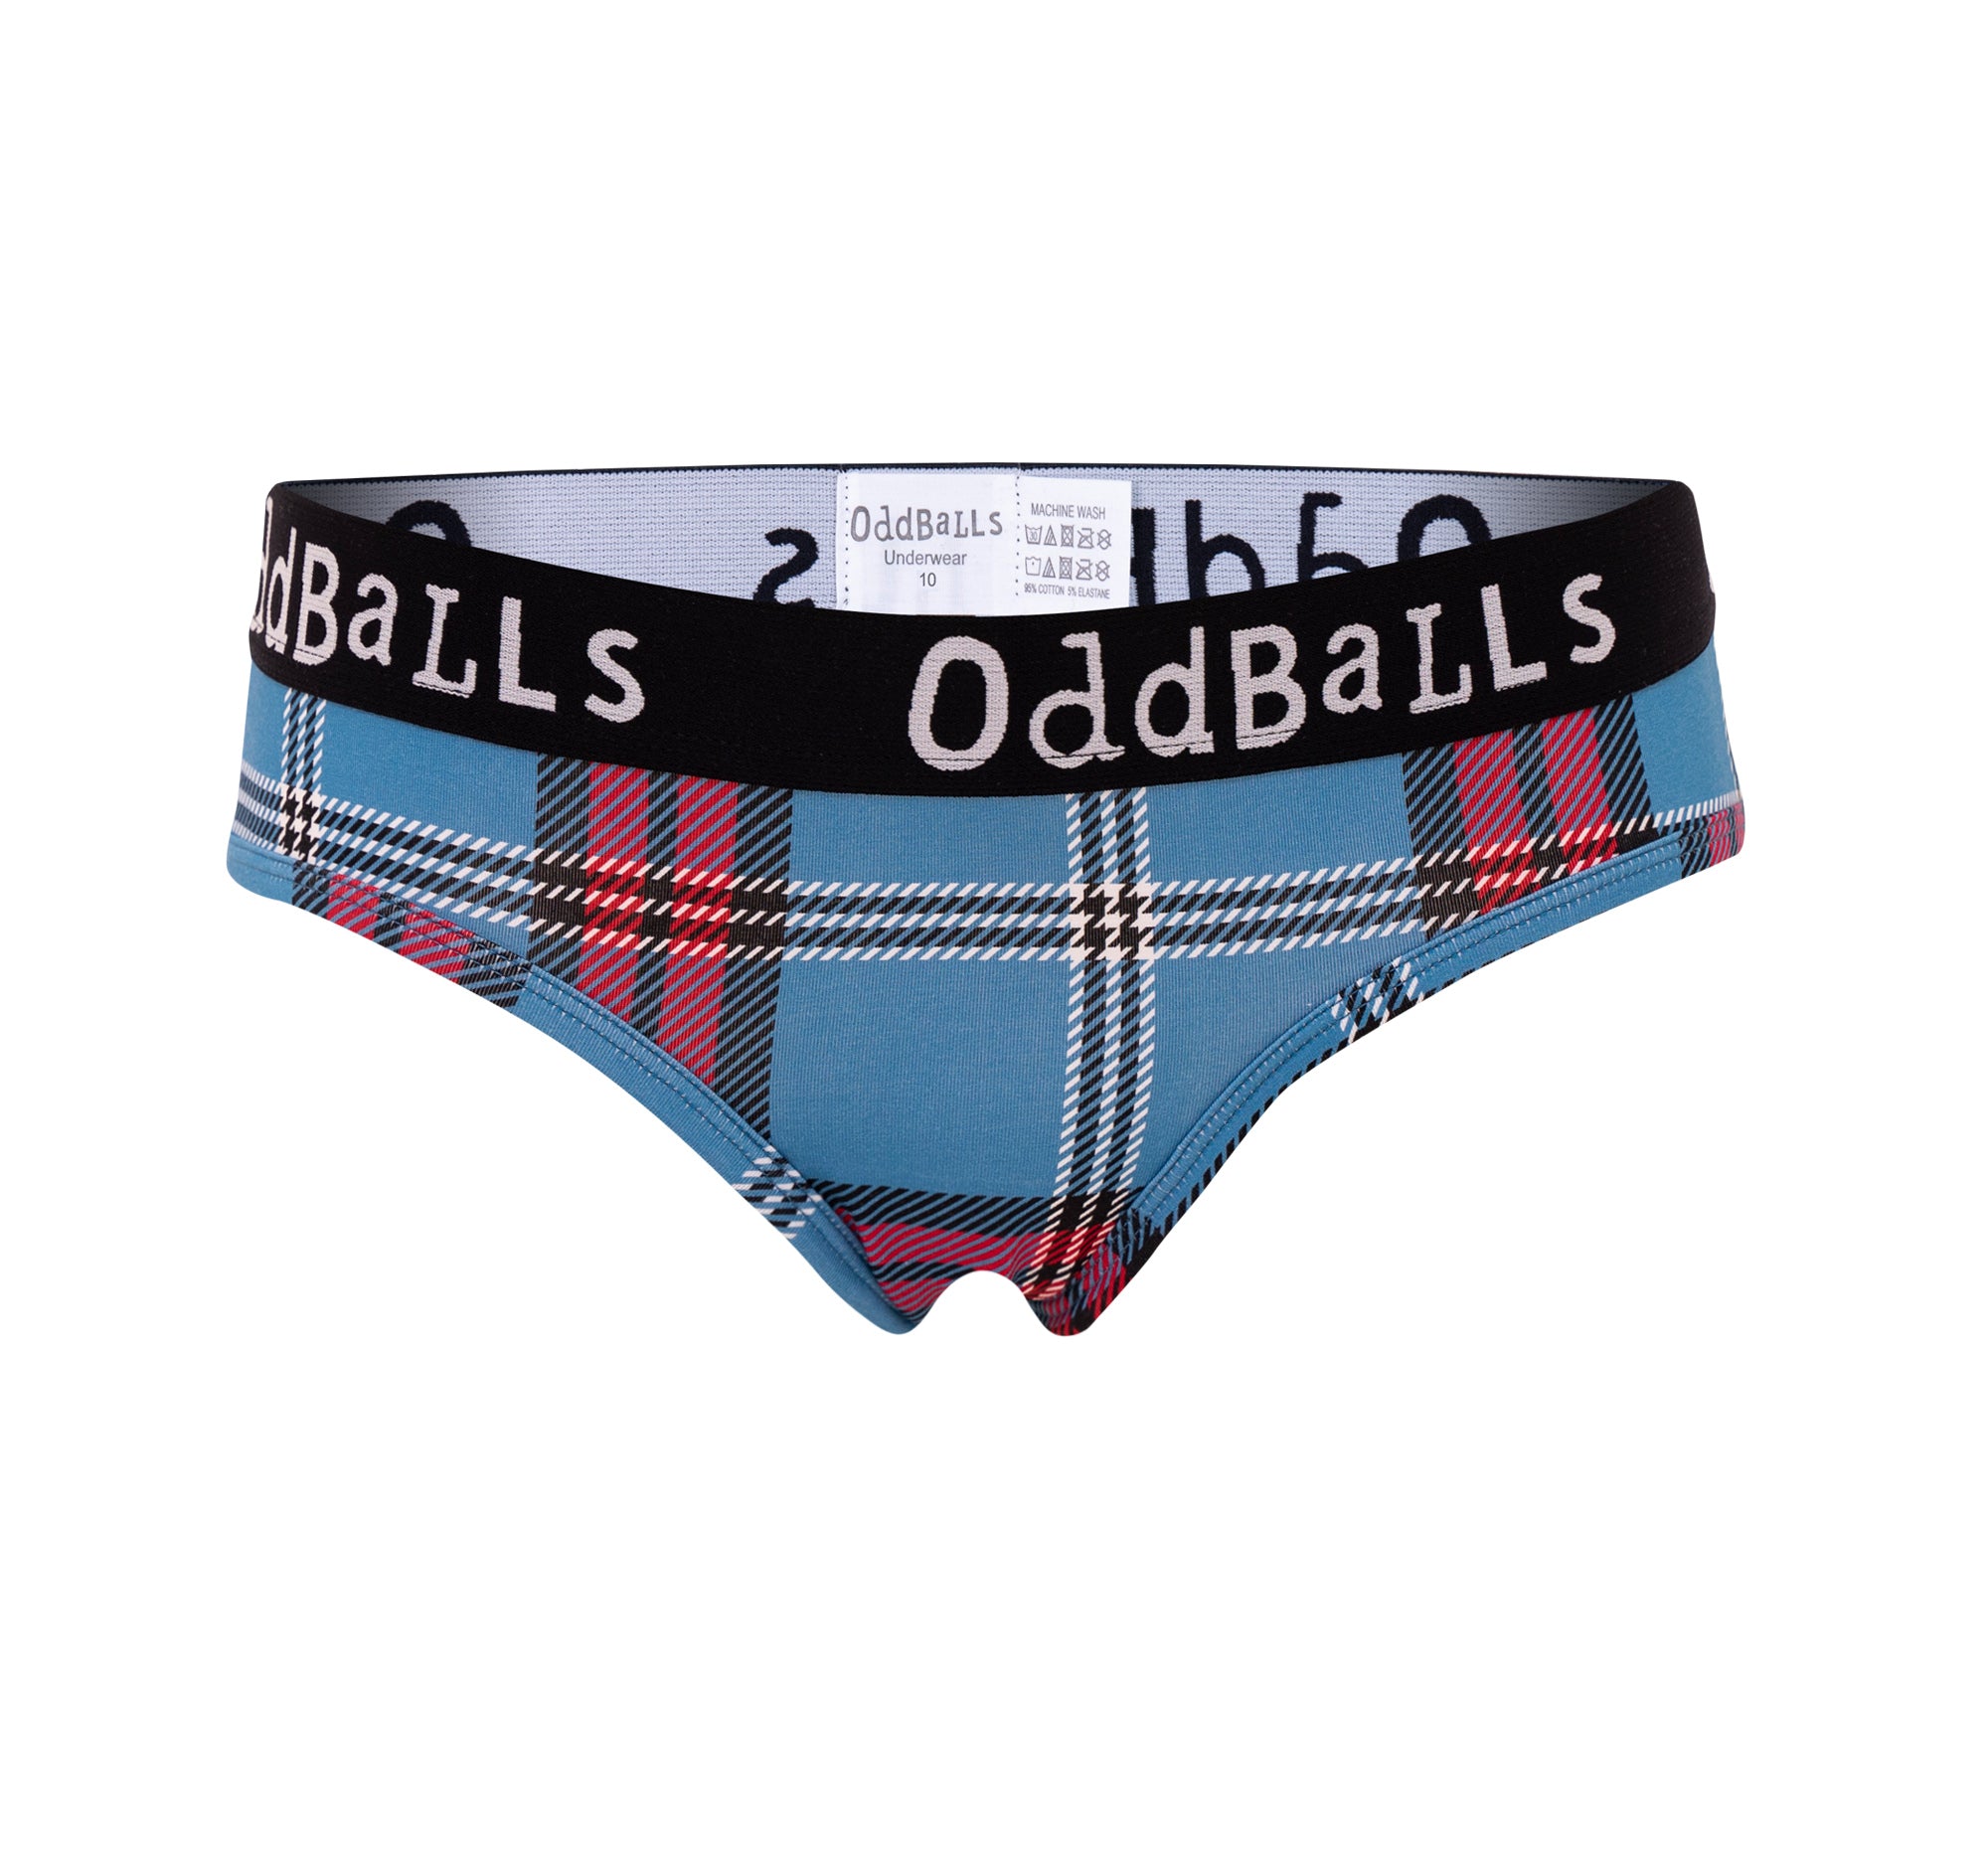 OddBalls Tartan Briefs - The University of Edinburgh – The